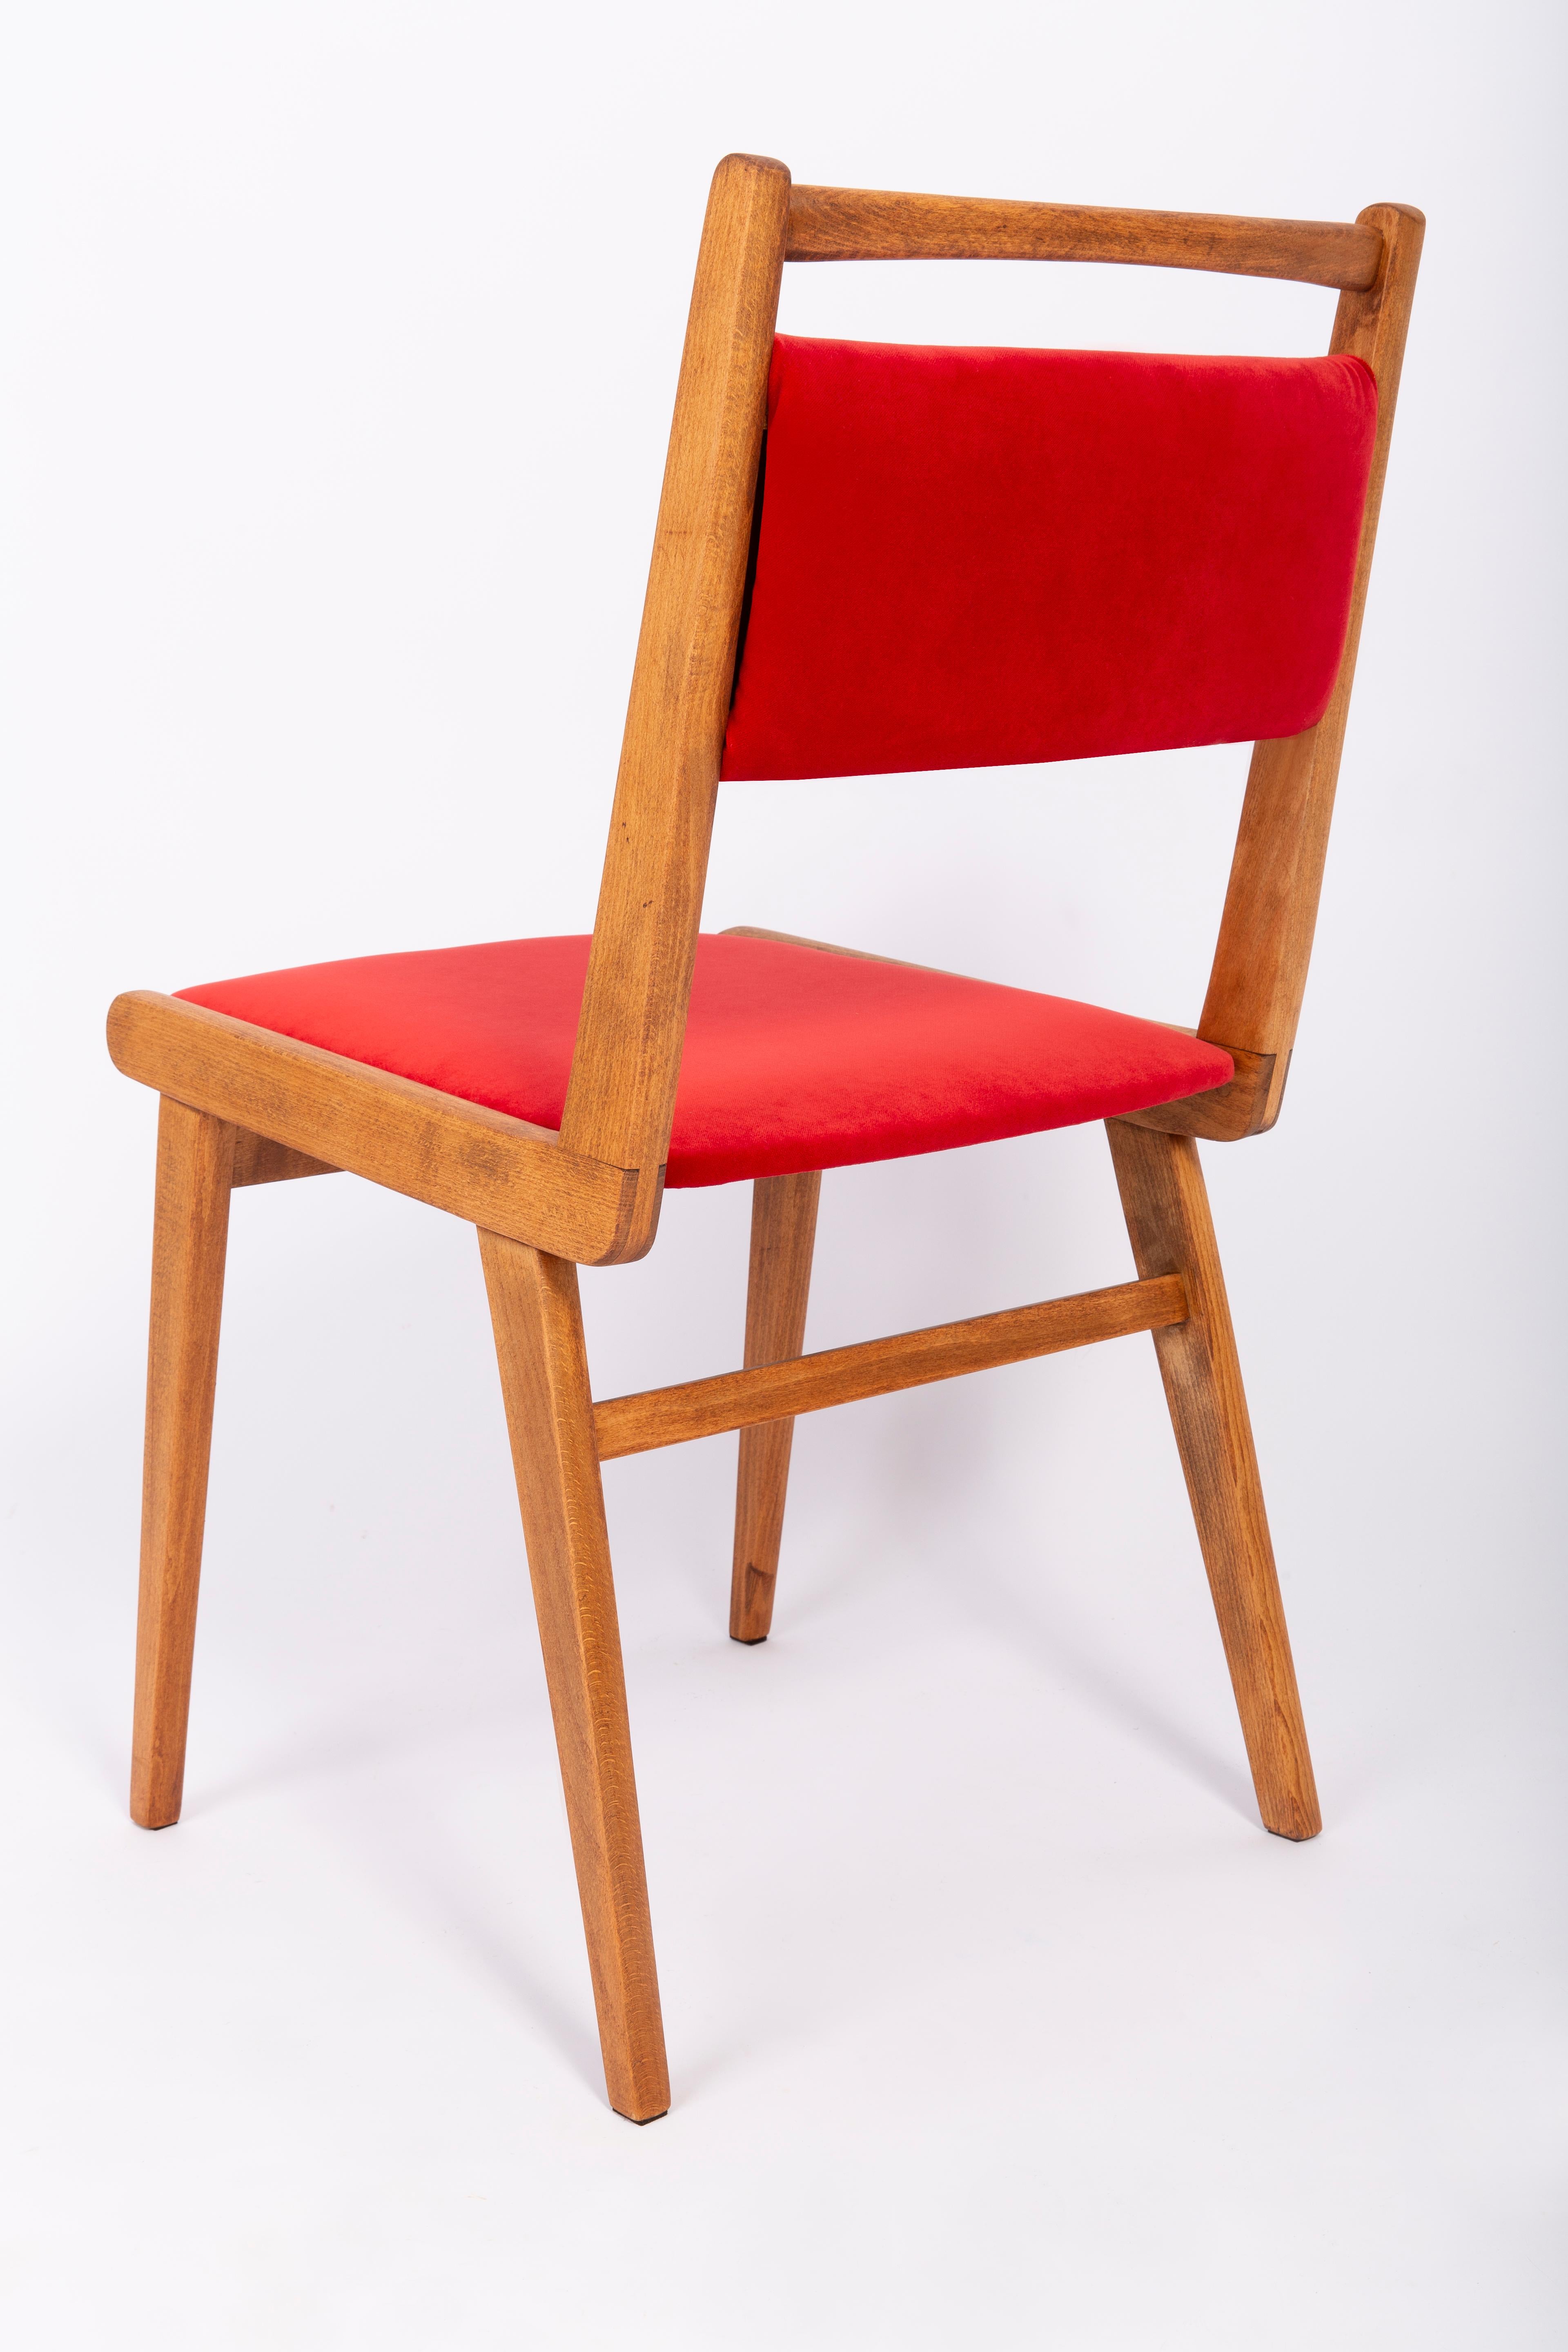 Set of Twelve 20th Century Red Velvet Chairs, by Rajmund Halas, Poland, 1960s For Sale 3